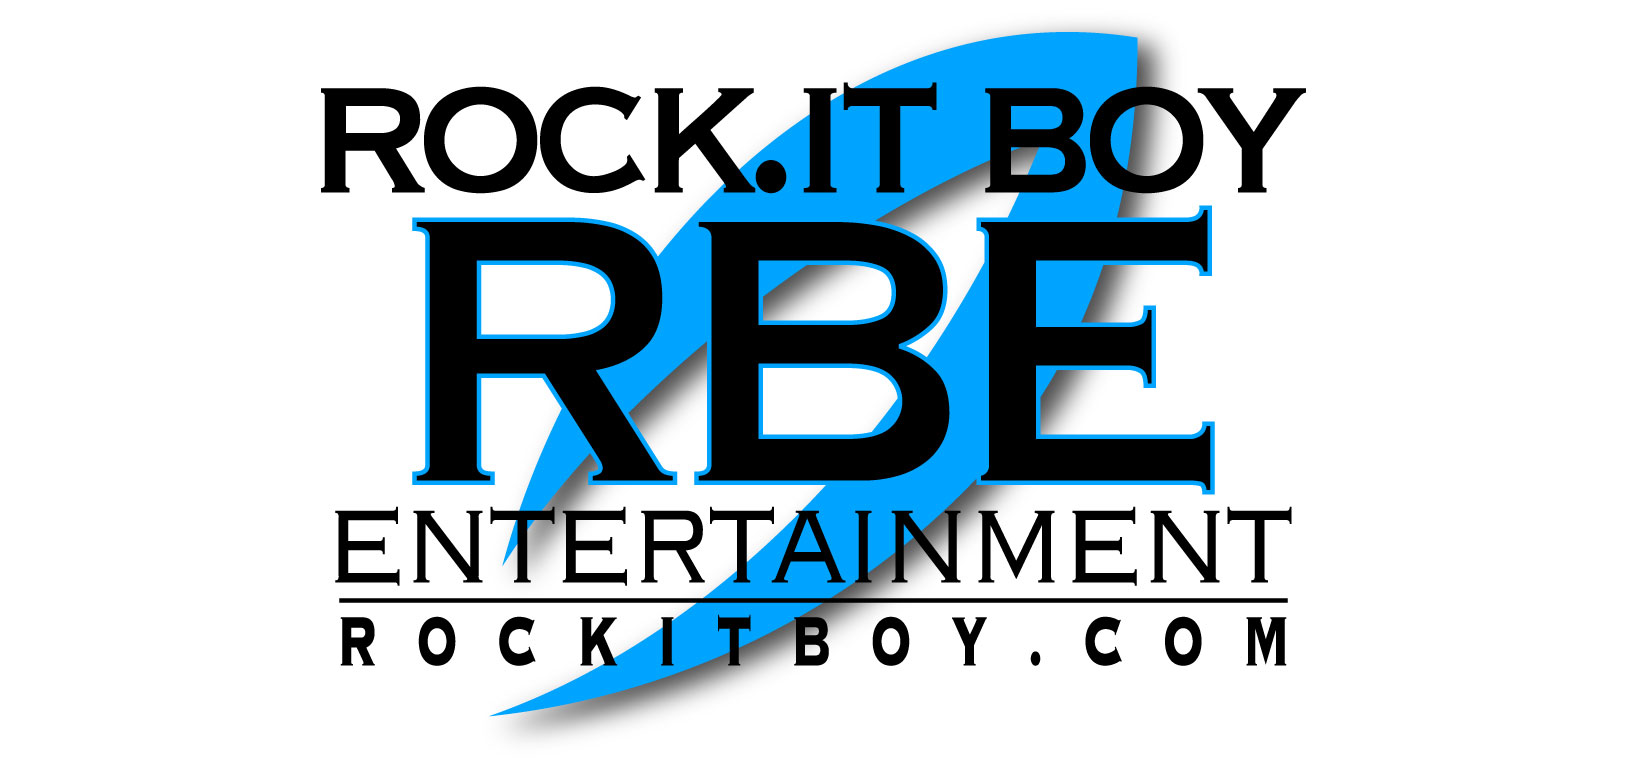 (c) Rockitboy.com